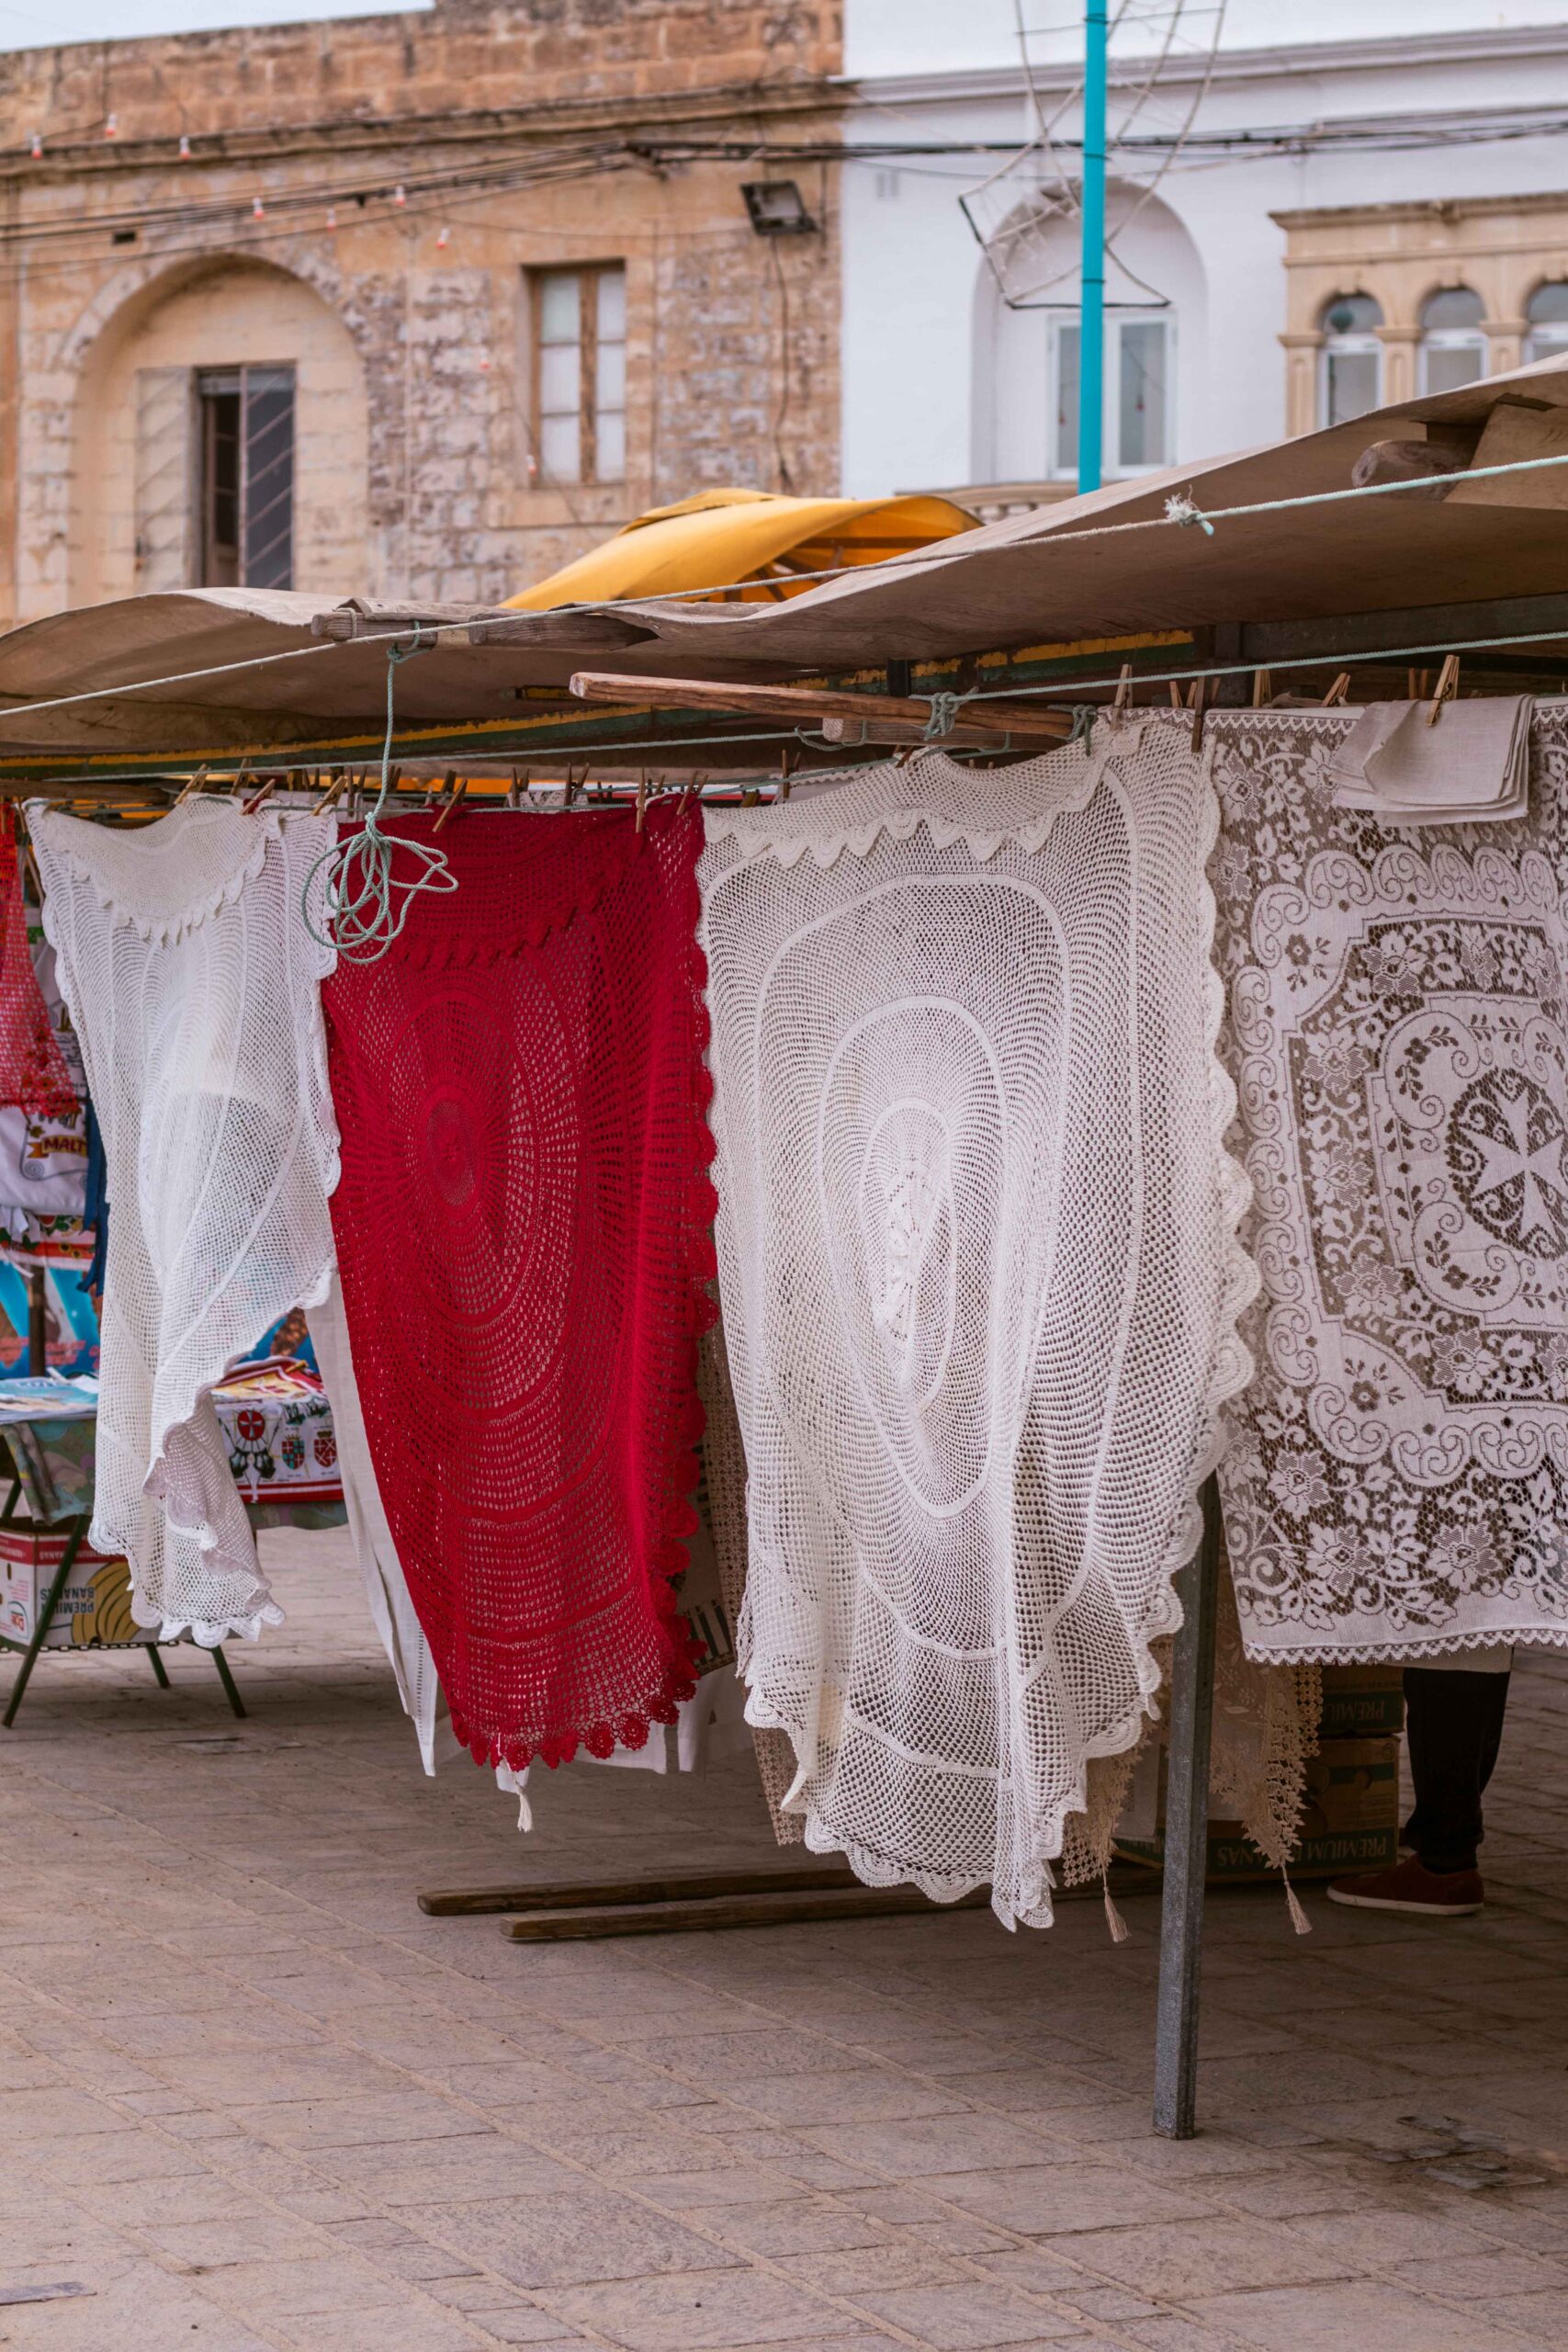 Handcraft tablecloths, cloths, blankets and lace in Marsaxlokk market, Malta